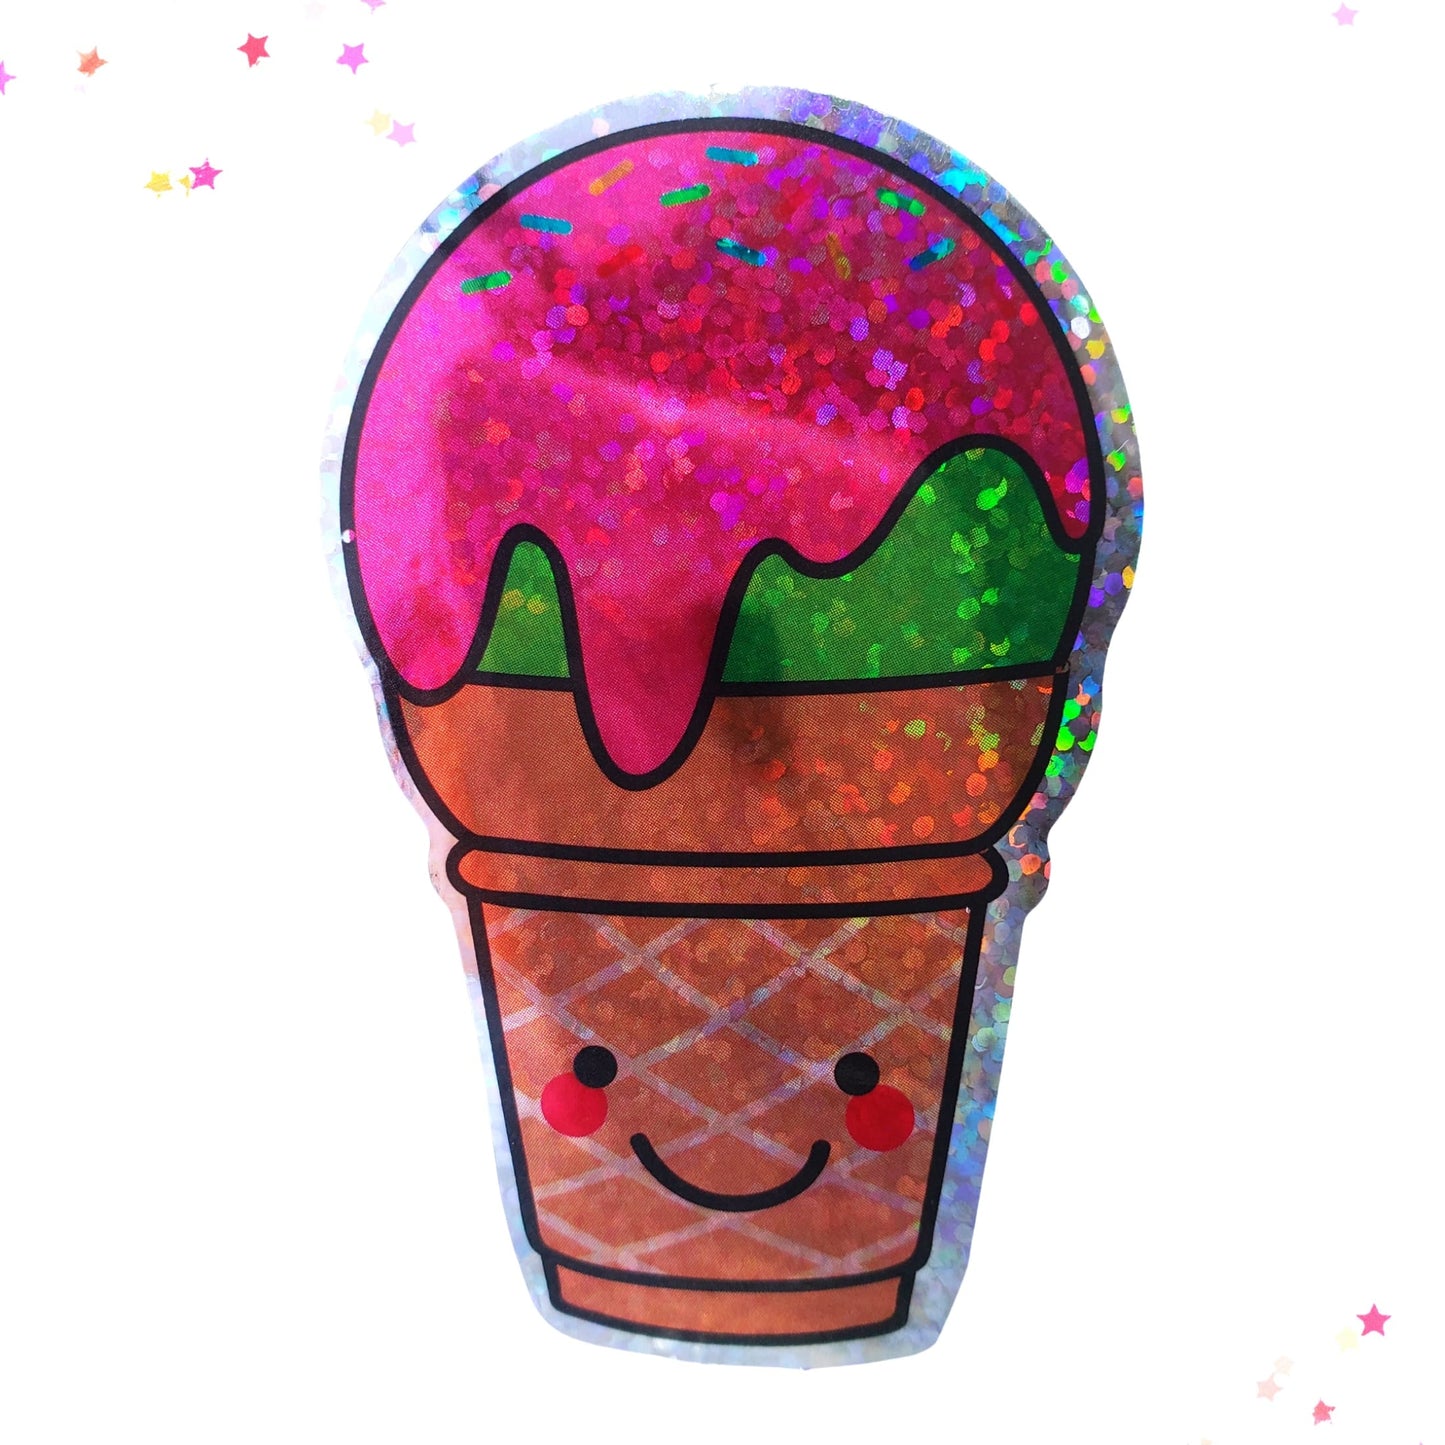 Premium Sticker - Sparkly Holographic Glitter Ice Cream Cone from Confetti Kitty, Only 2.0